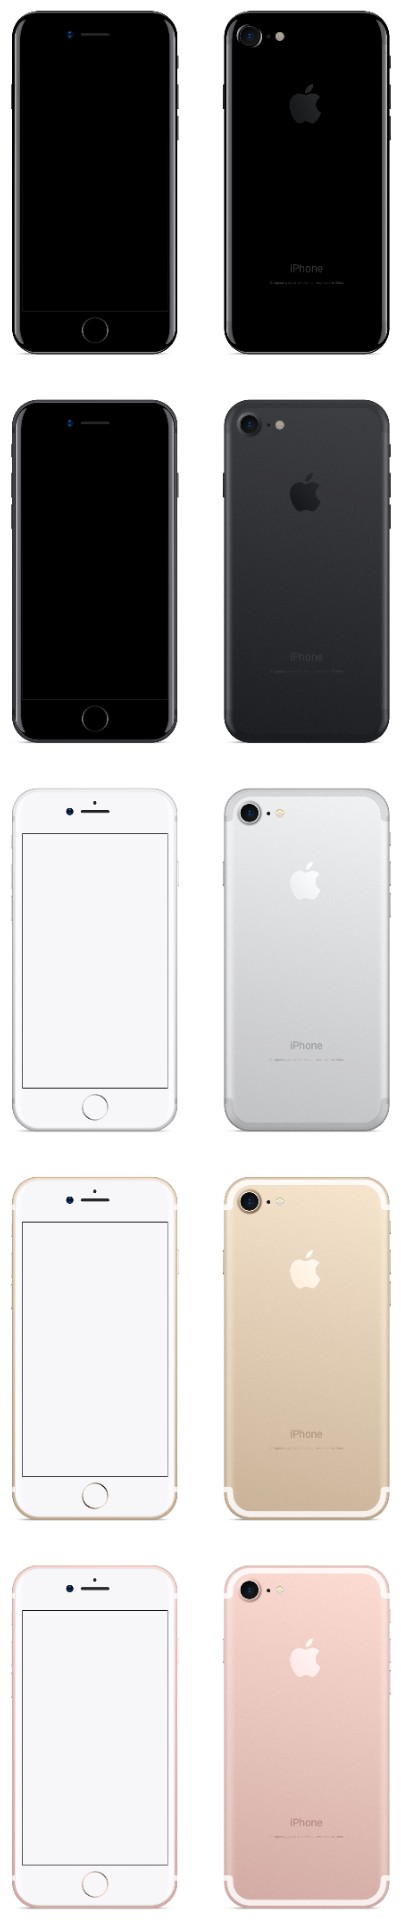 iPhone 7 正背面全色系模型0